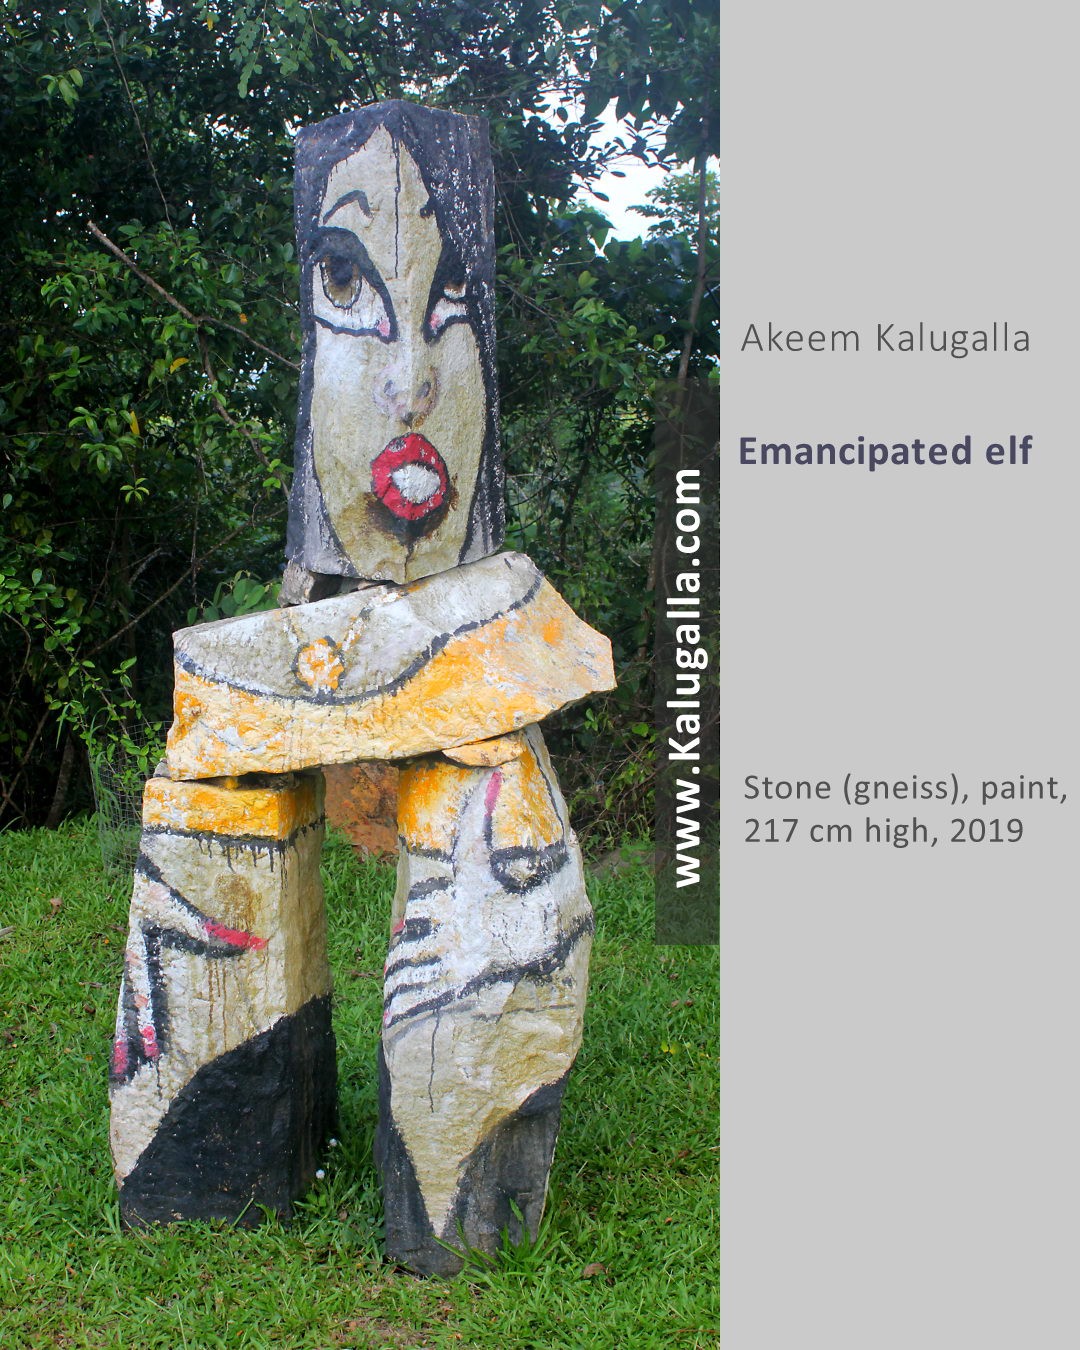 Emancipated Elf by Akeem Kalugalla